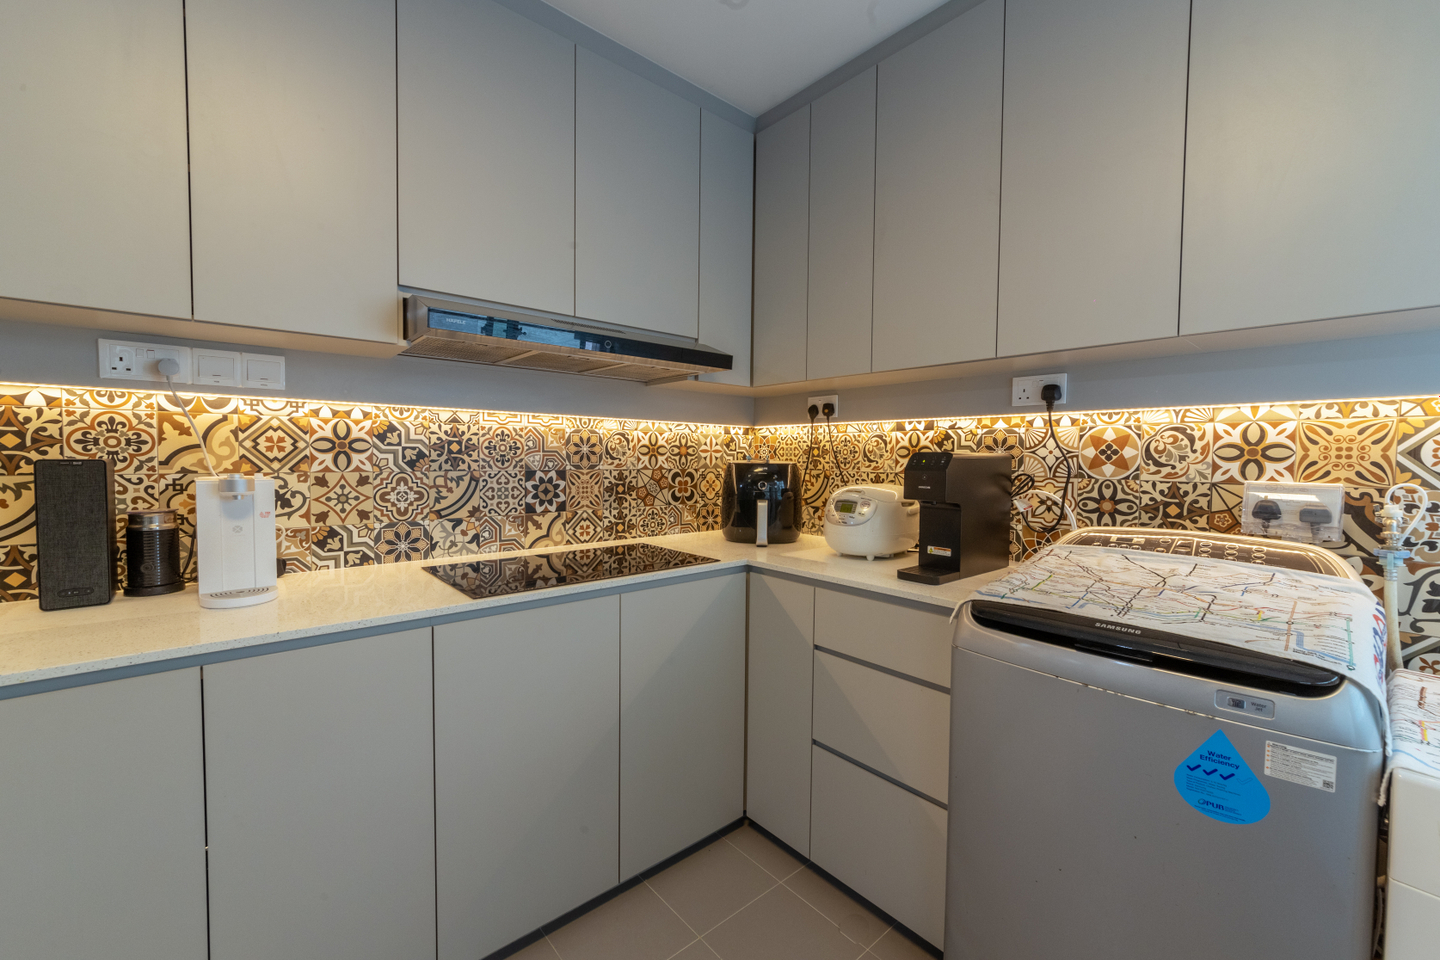 Compact Kitchen With Minimalist Interior Design - Livspace